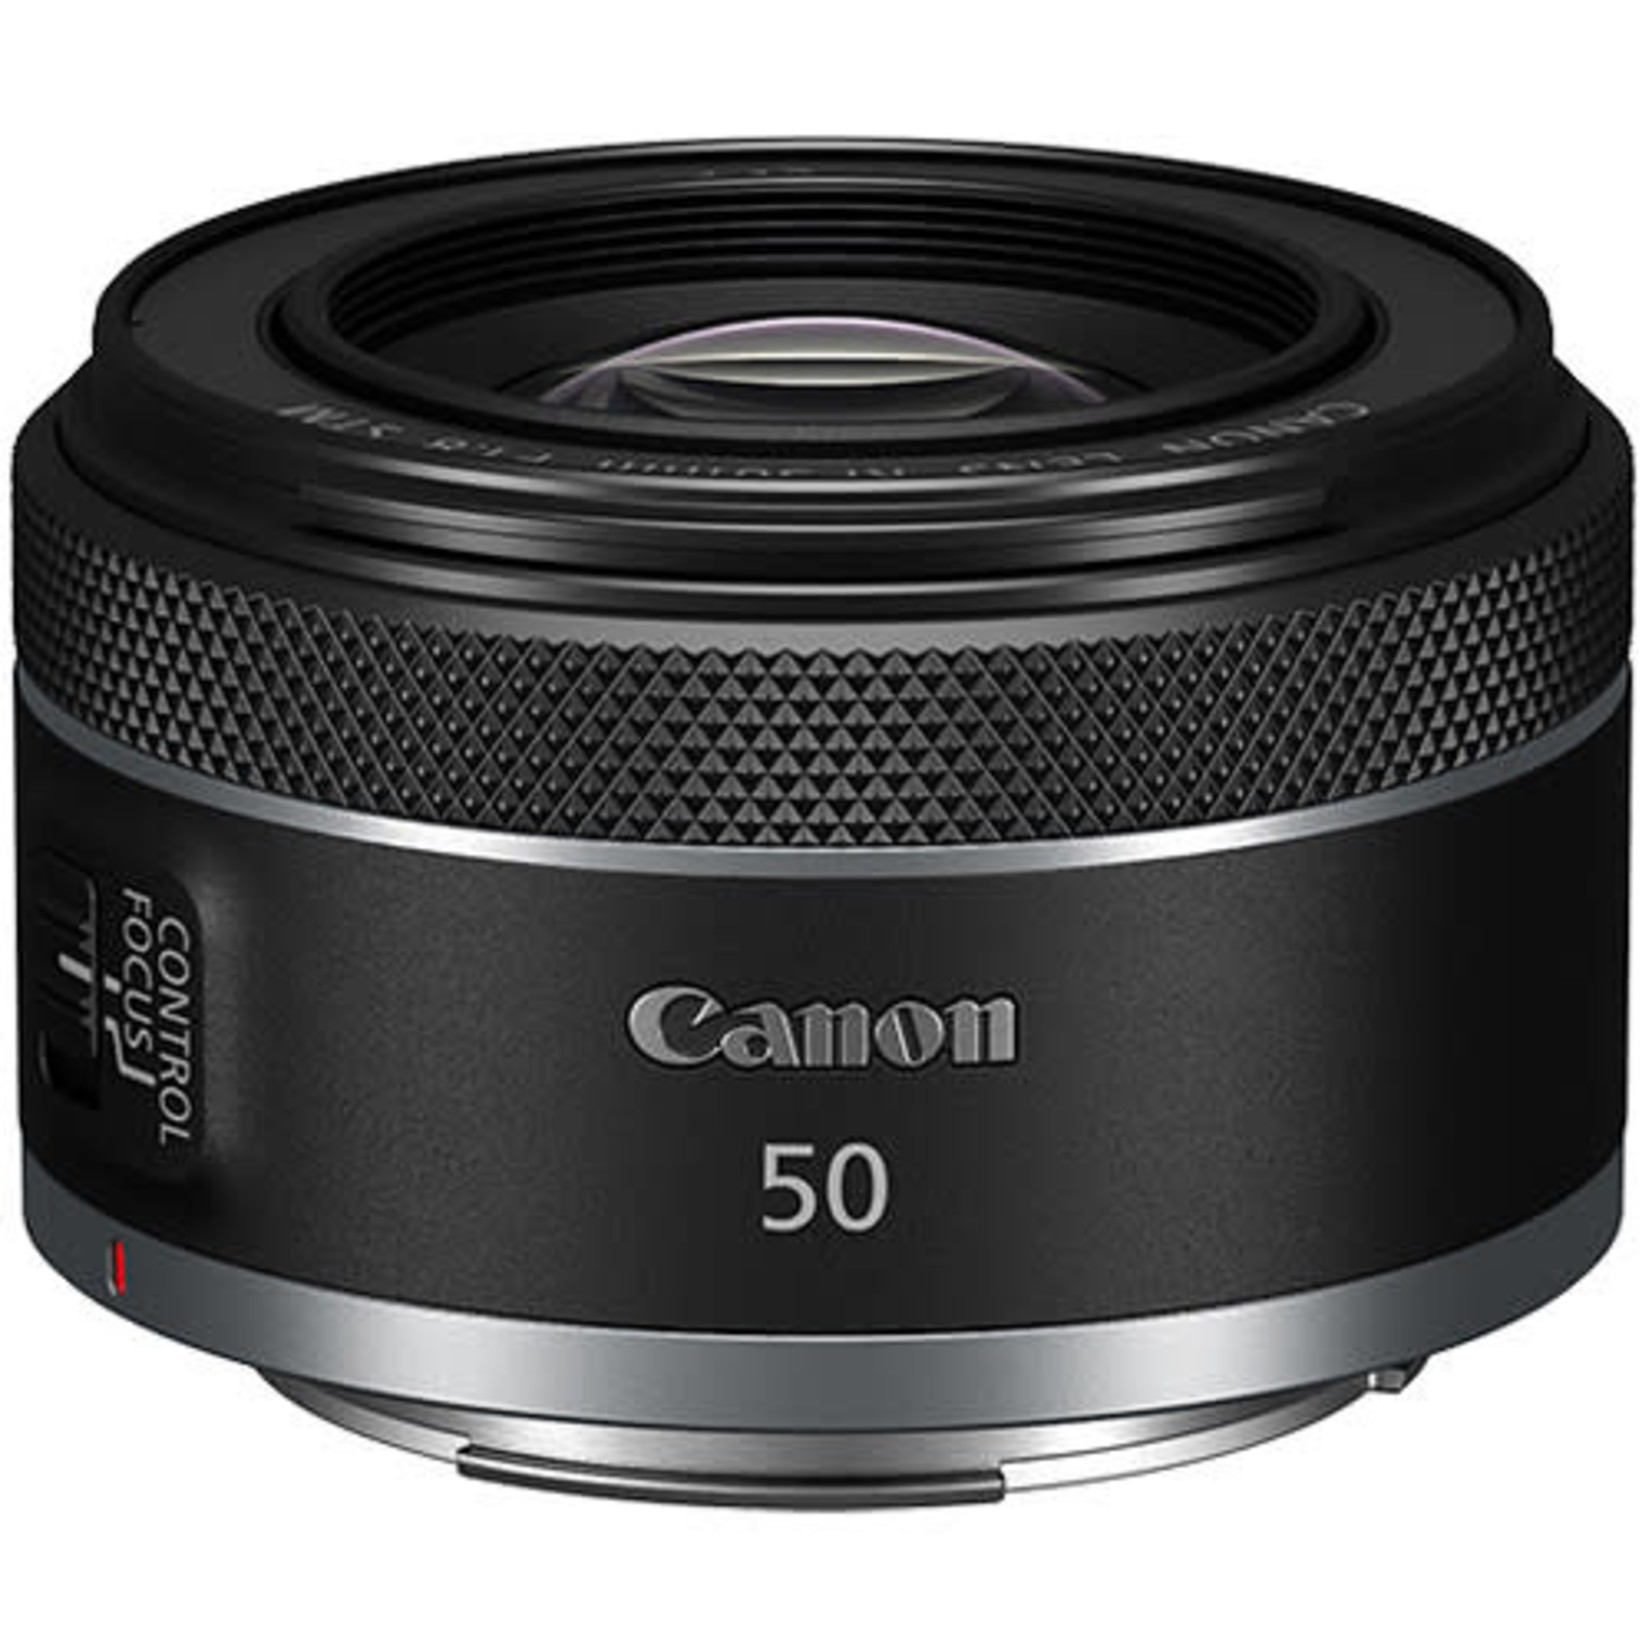 Canon Canon RF 50mm f/1.8 STM Lens